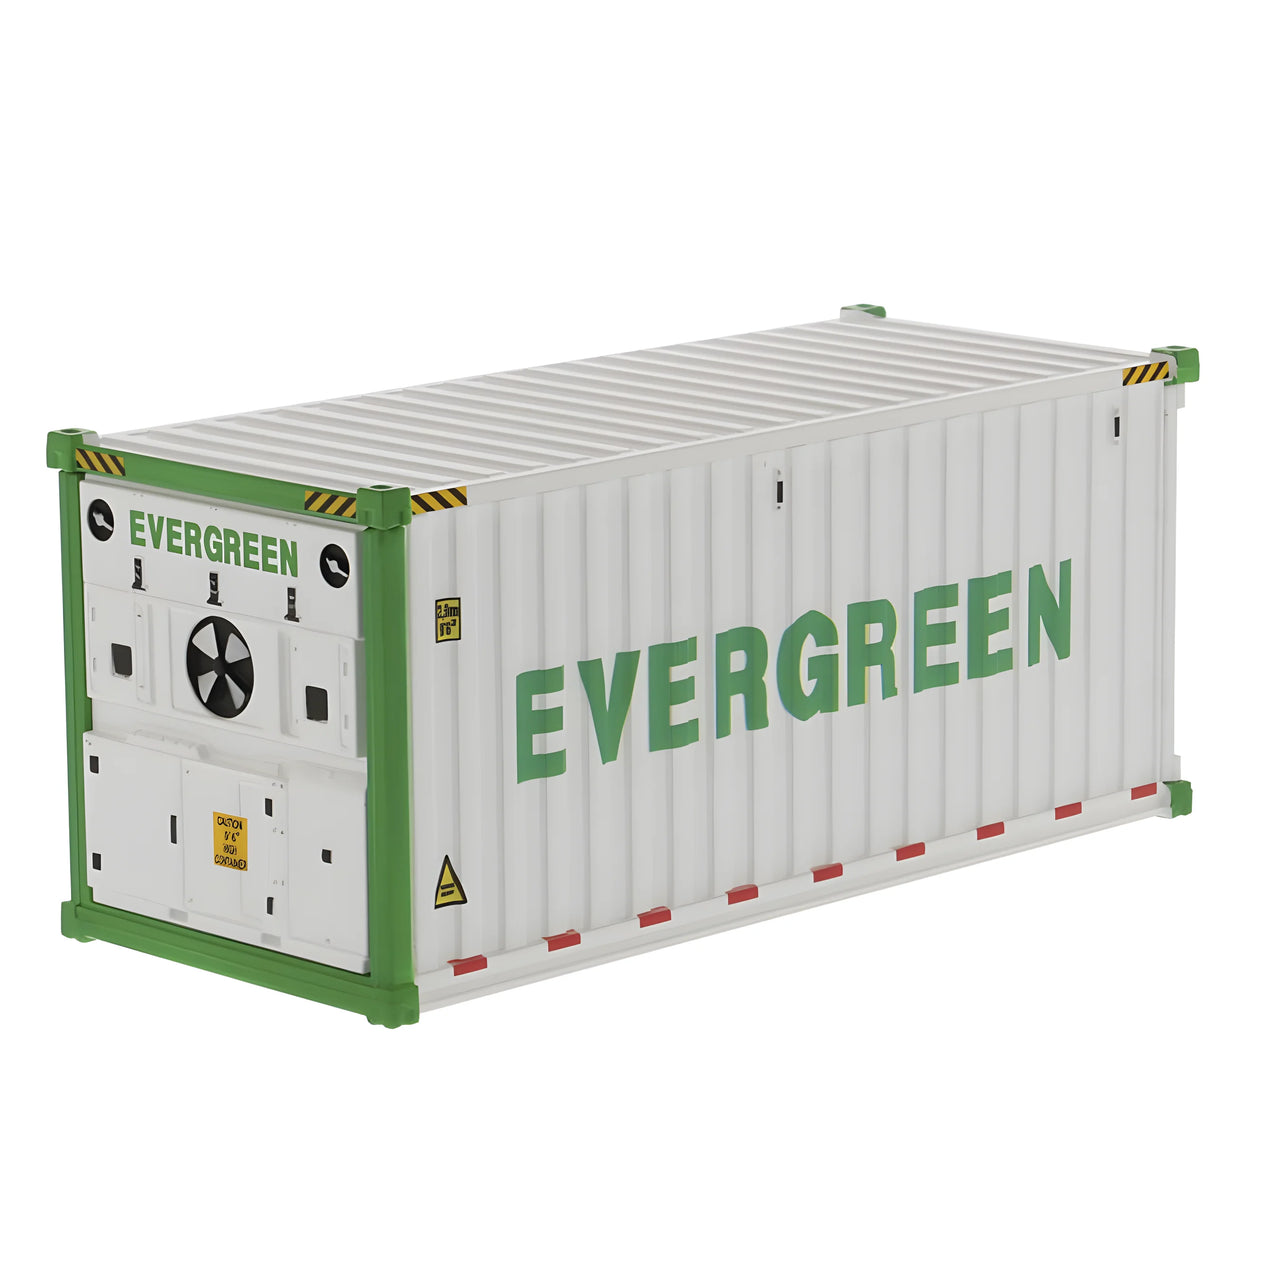 91026A 20' Refrigerated Sea Container Escala 1:50 (Modelo Descontinuado)